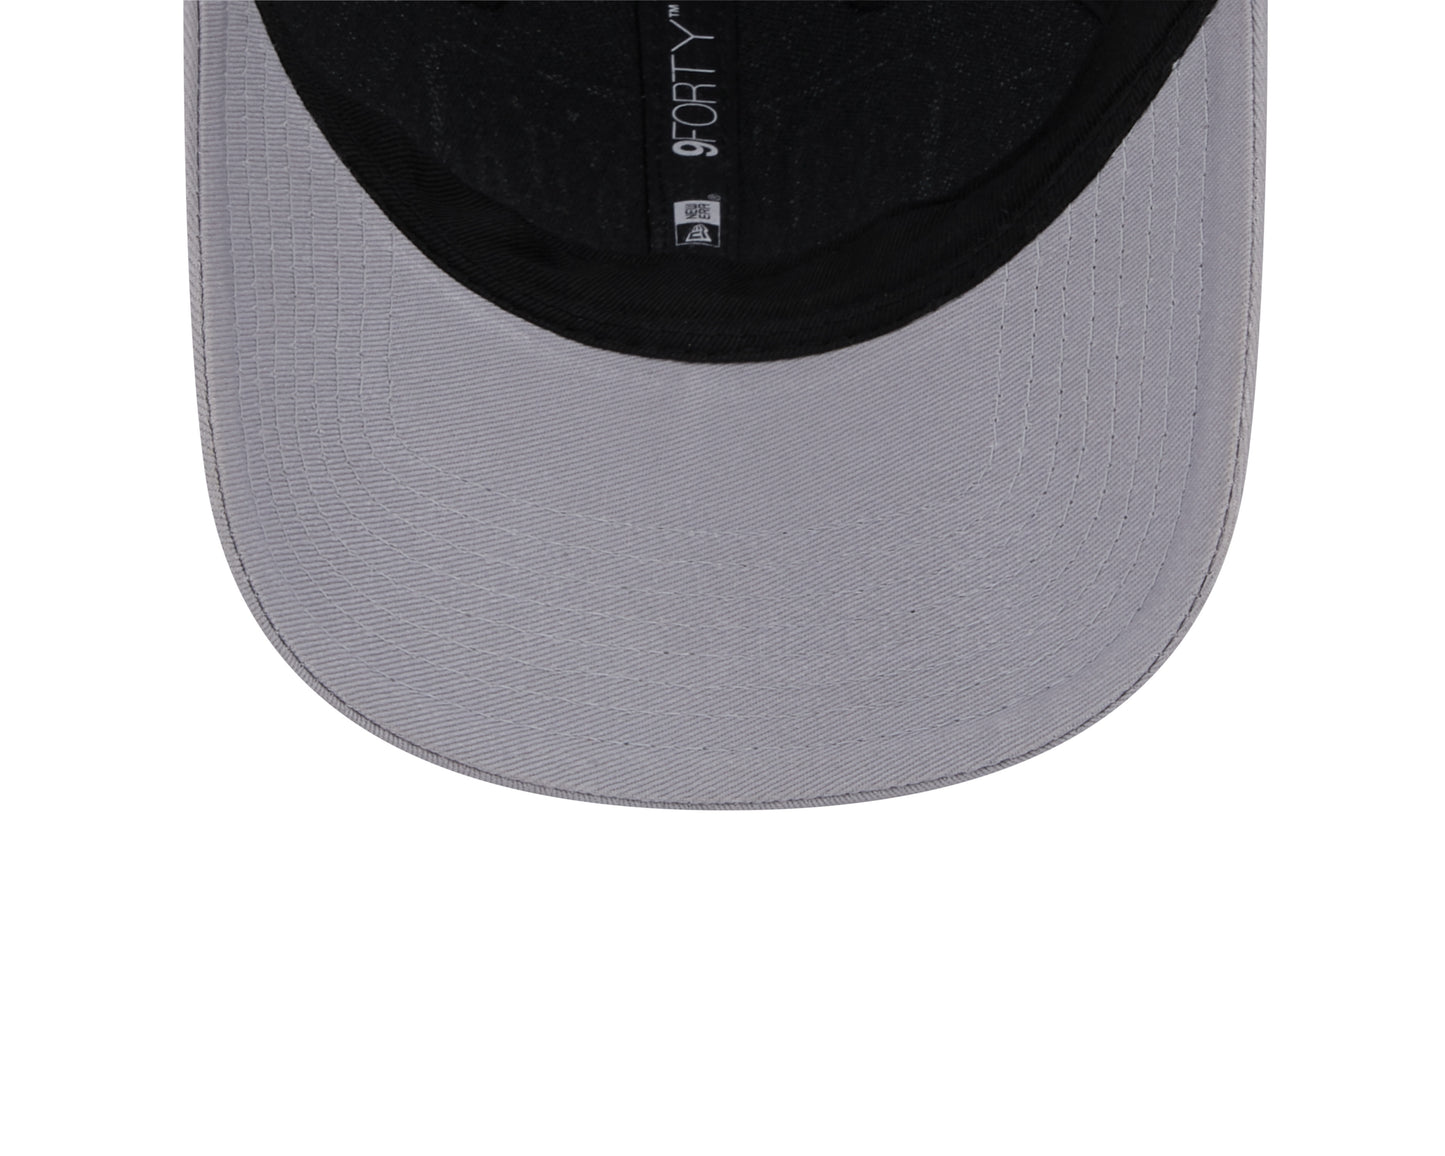 Chicago White Sox New Era Logo Patch Trucker 9FORTY Snapback Hat